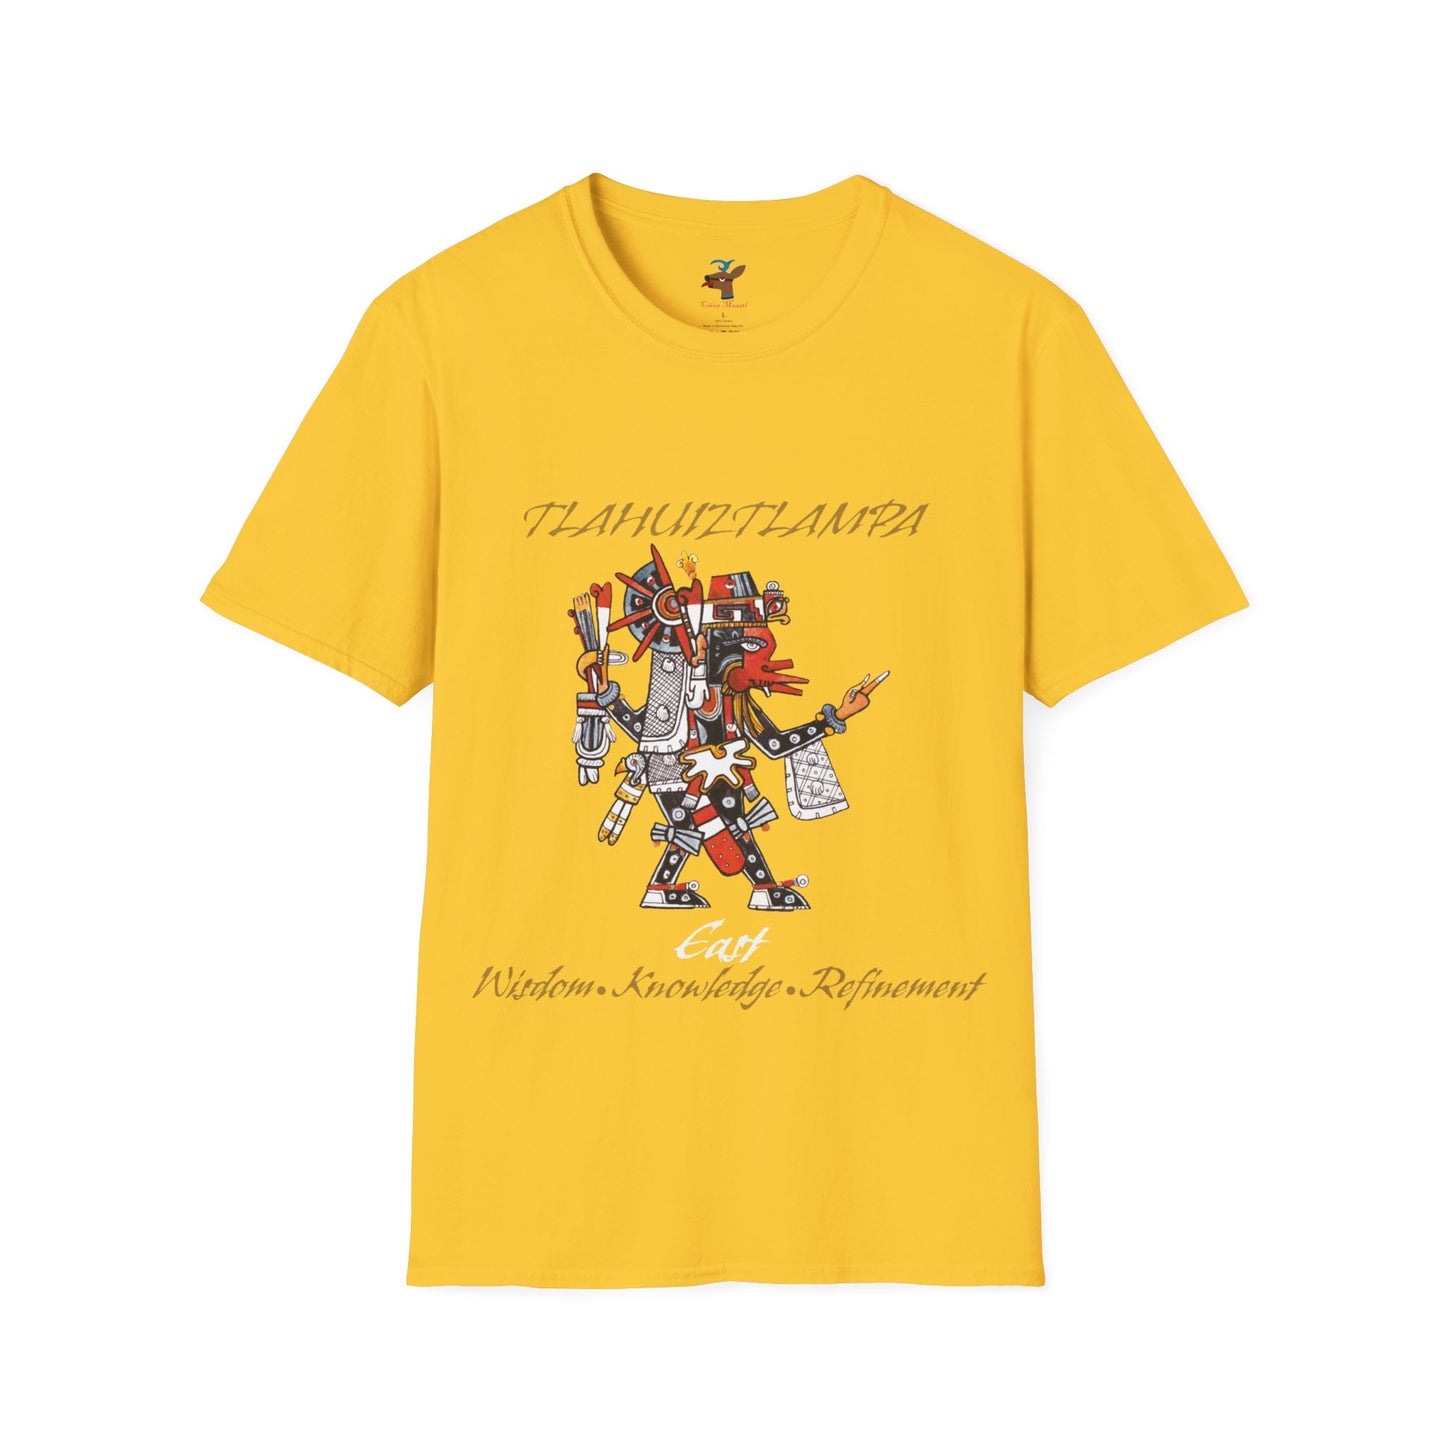 Tlahuiztlampa Quetzalcoatl Unisex Softstyle T-Shirt| east direction| aztec dance| danza azteca| apparel| clothing| tshirt